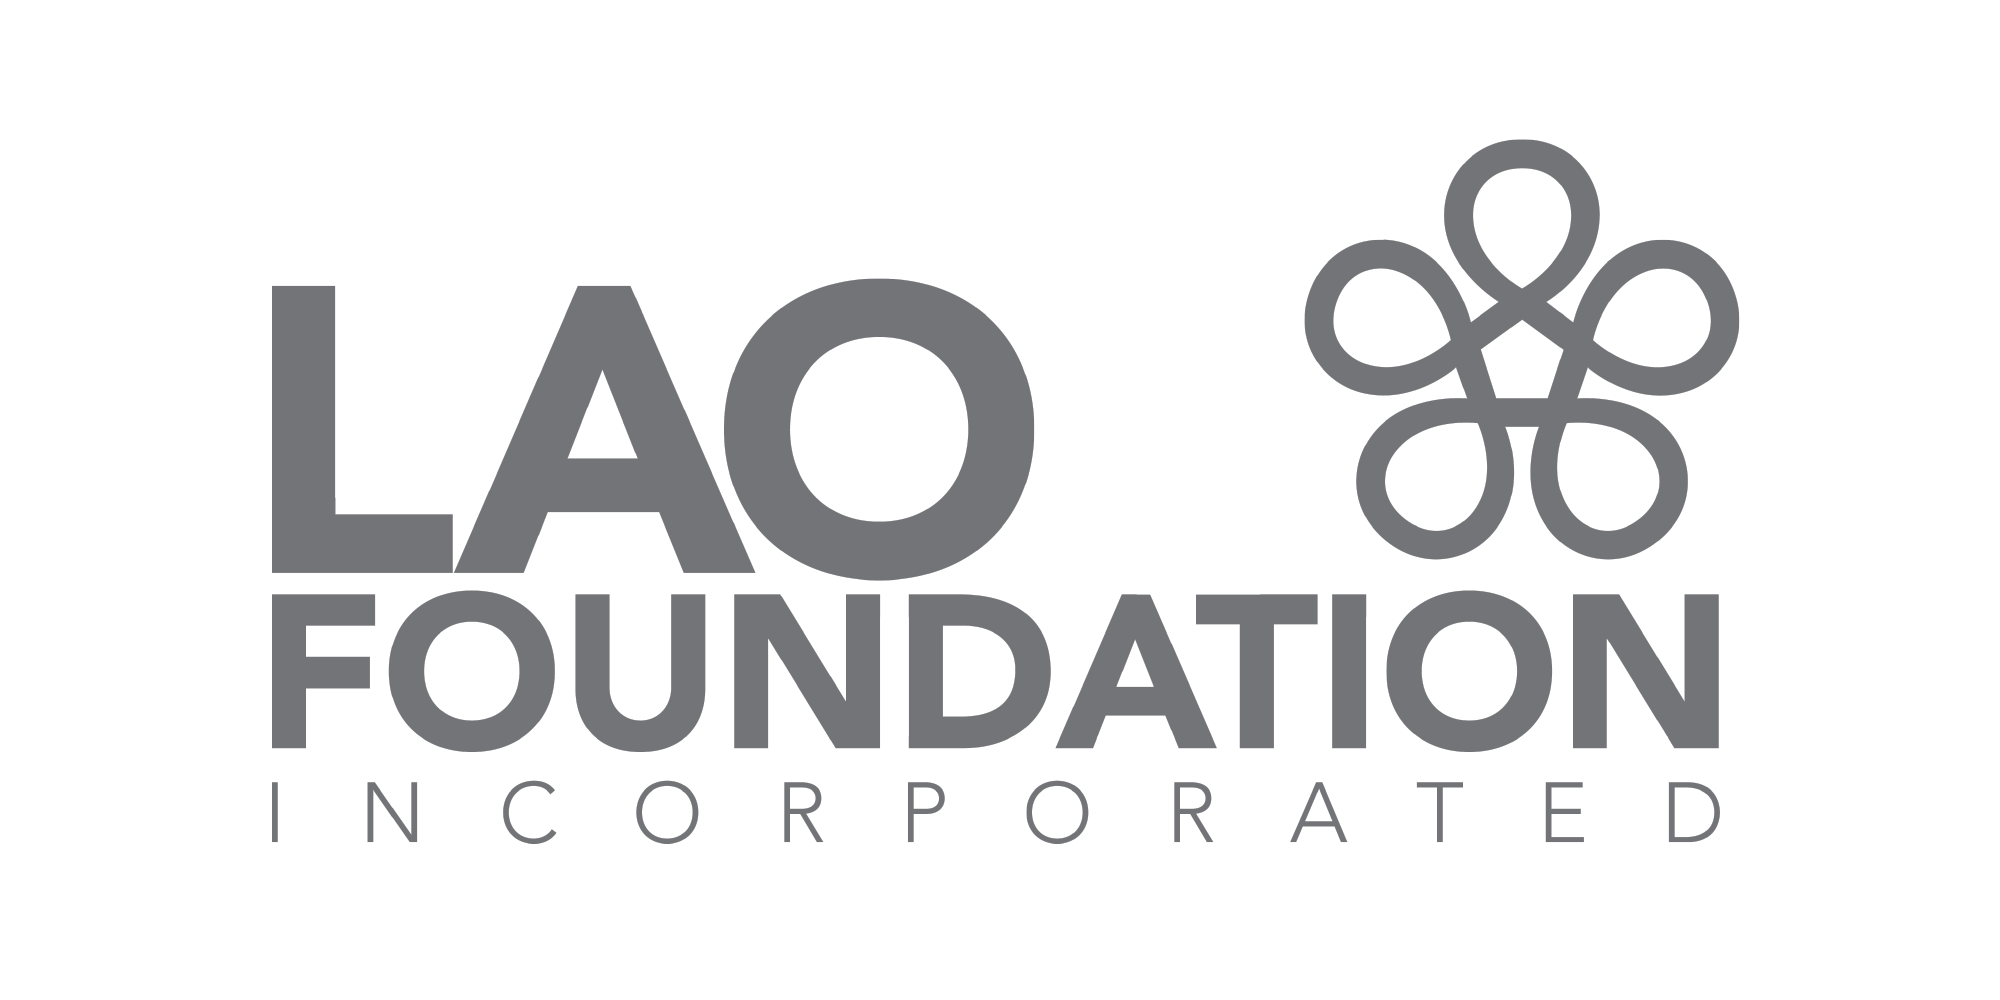 Lao Foundation Incorporated gray logo